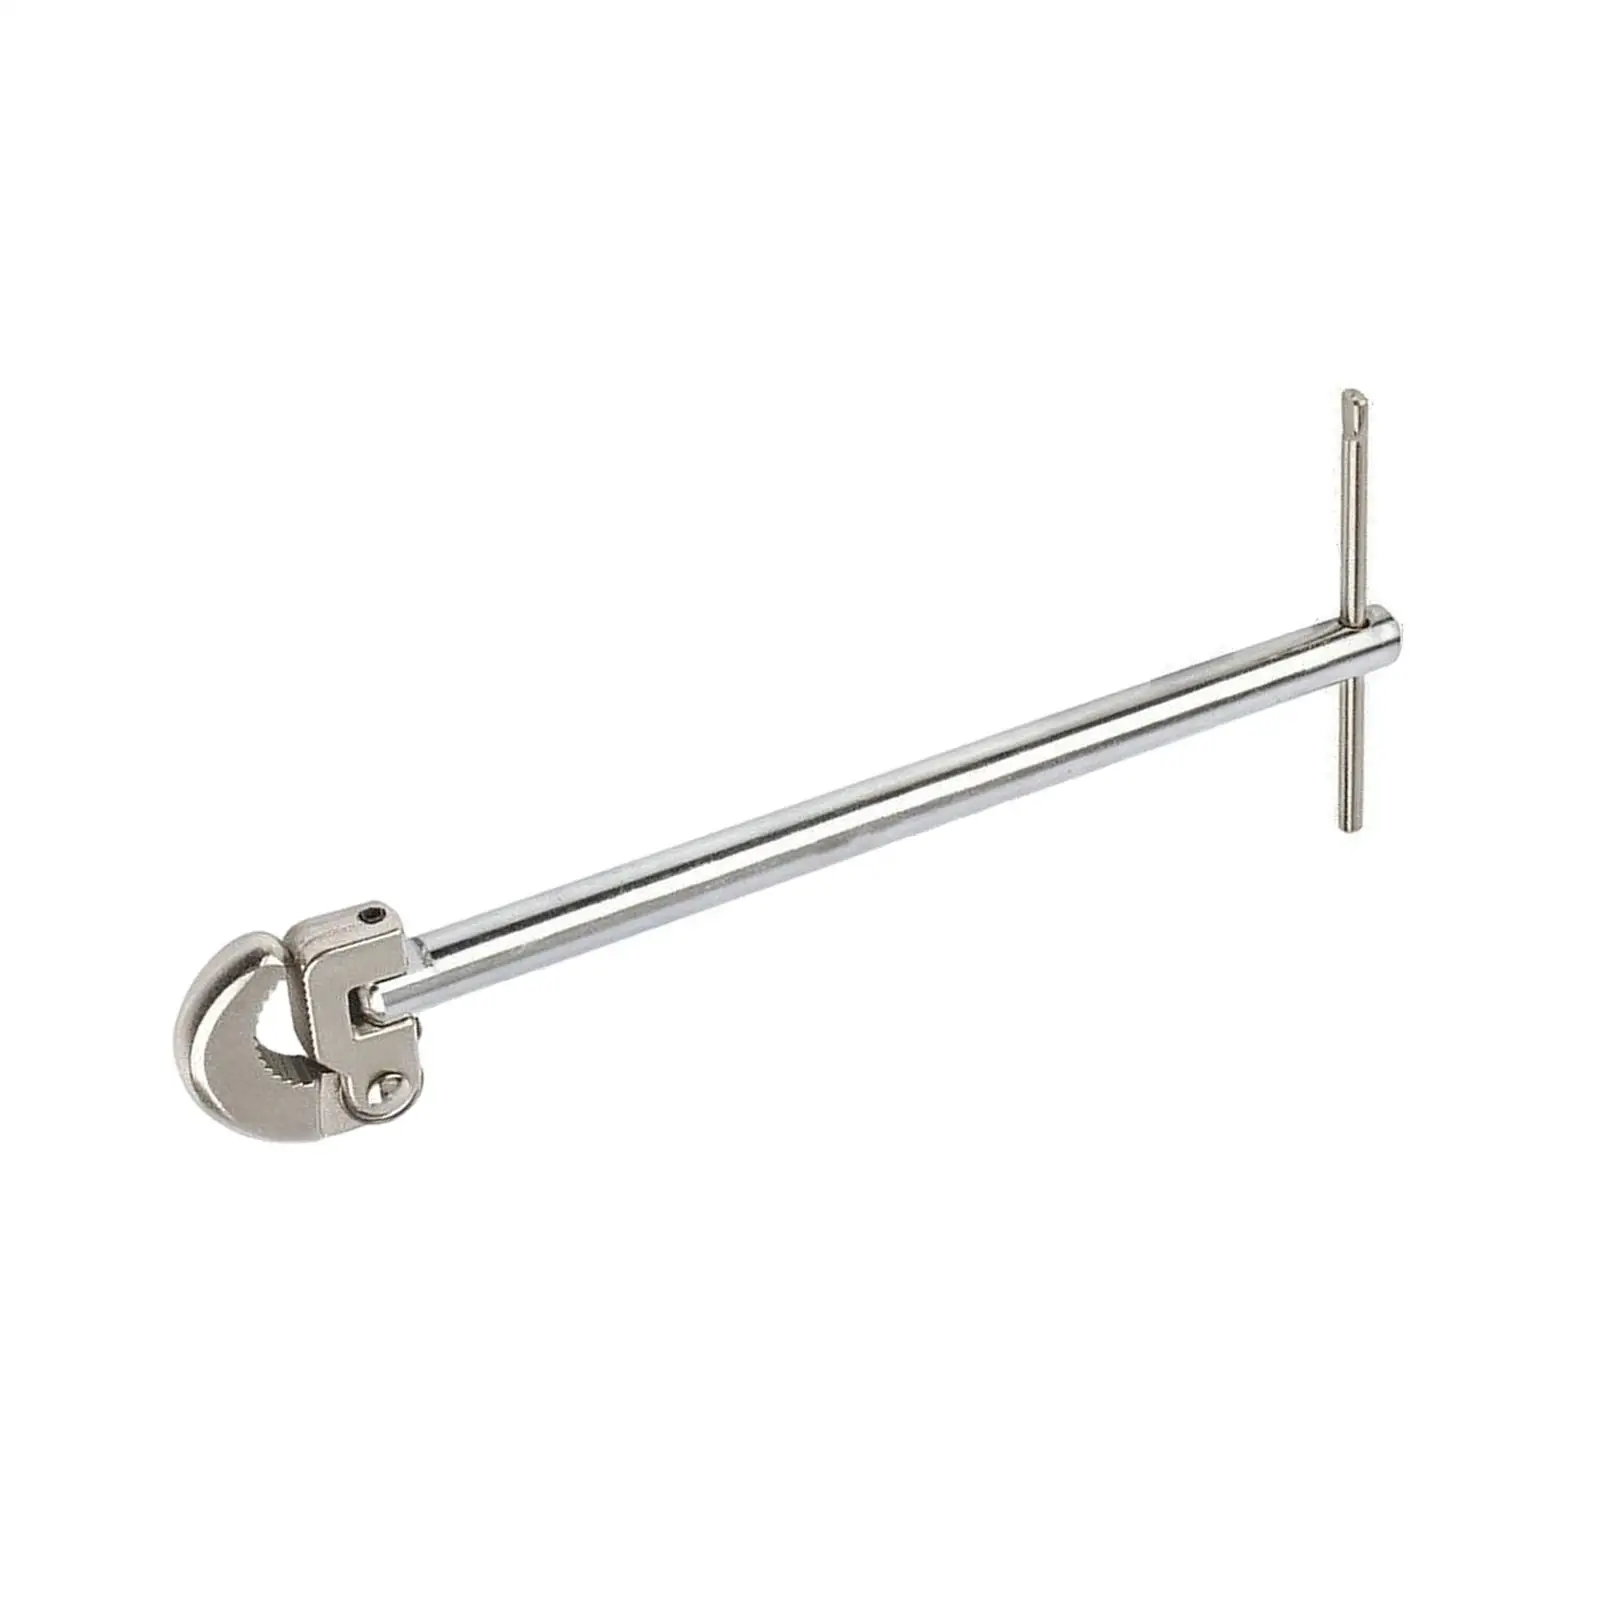 Basin Spanner Retractable Telescoping Basin Wrench for Garden Yard Bathroom Plumber